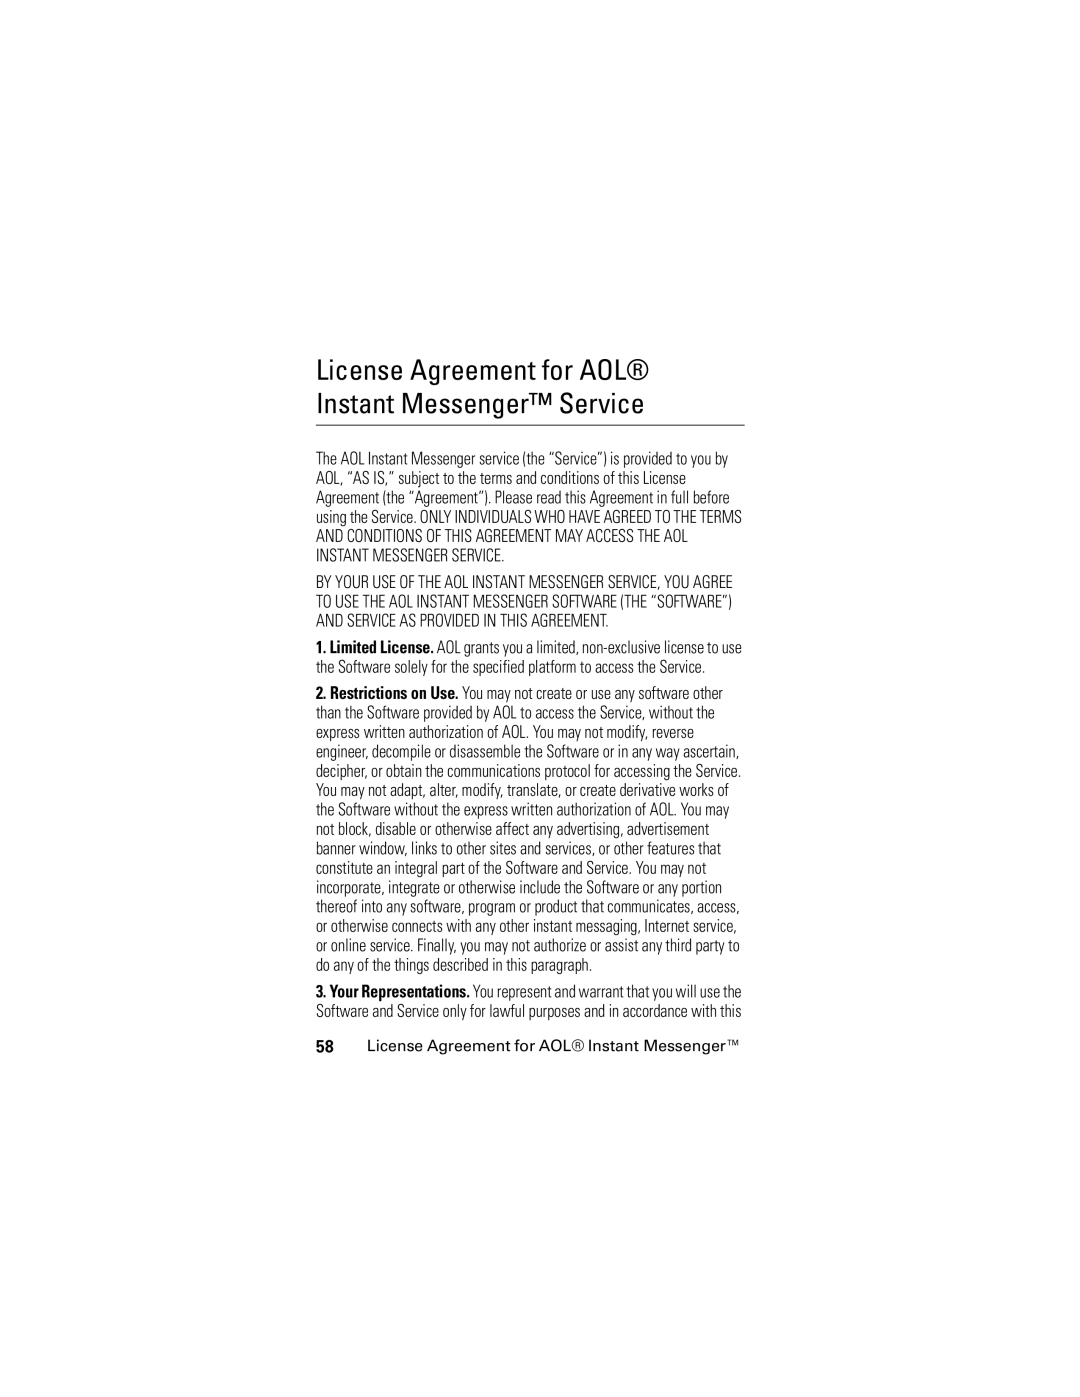 Motorola V186 manual License Agreement for AOL Instant Messenger Service 